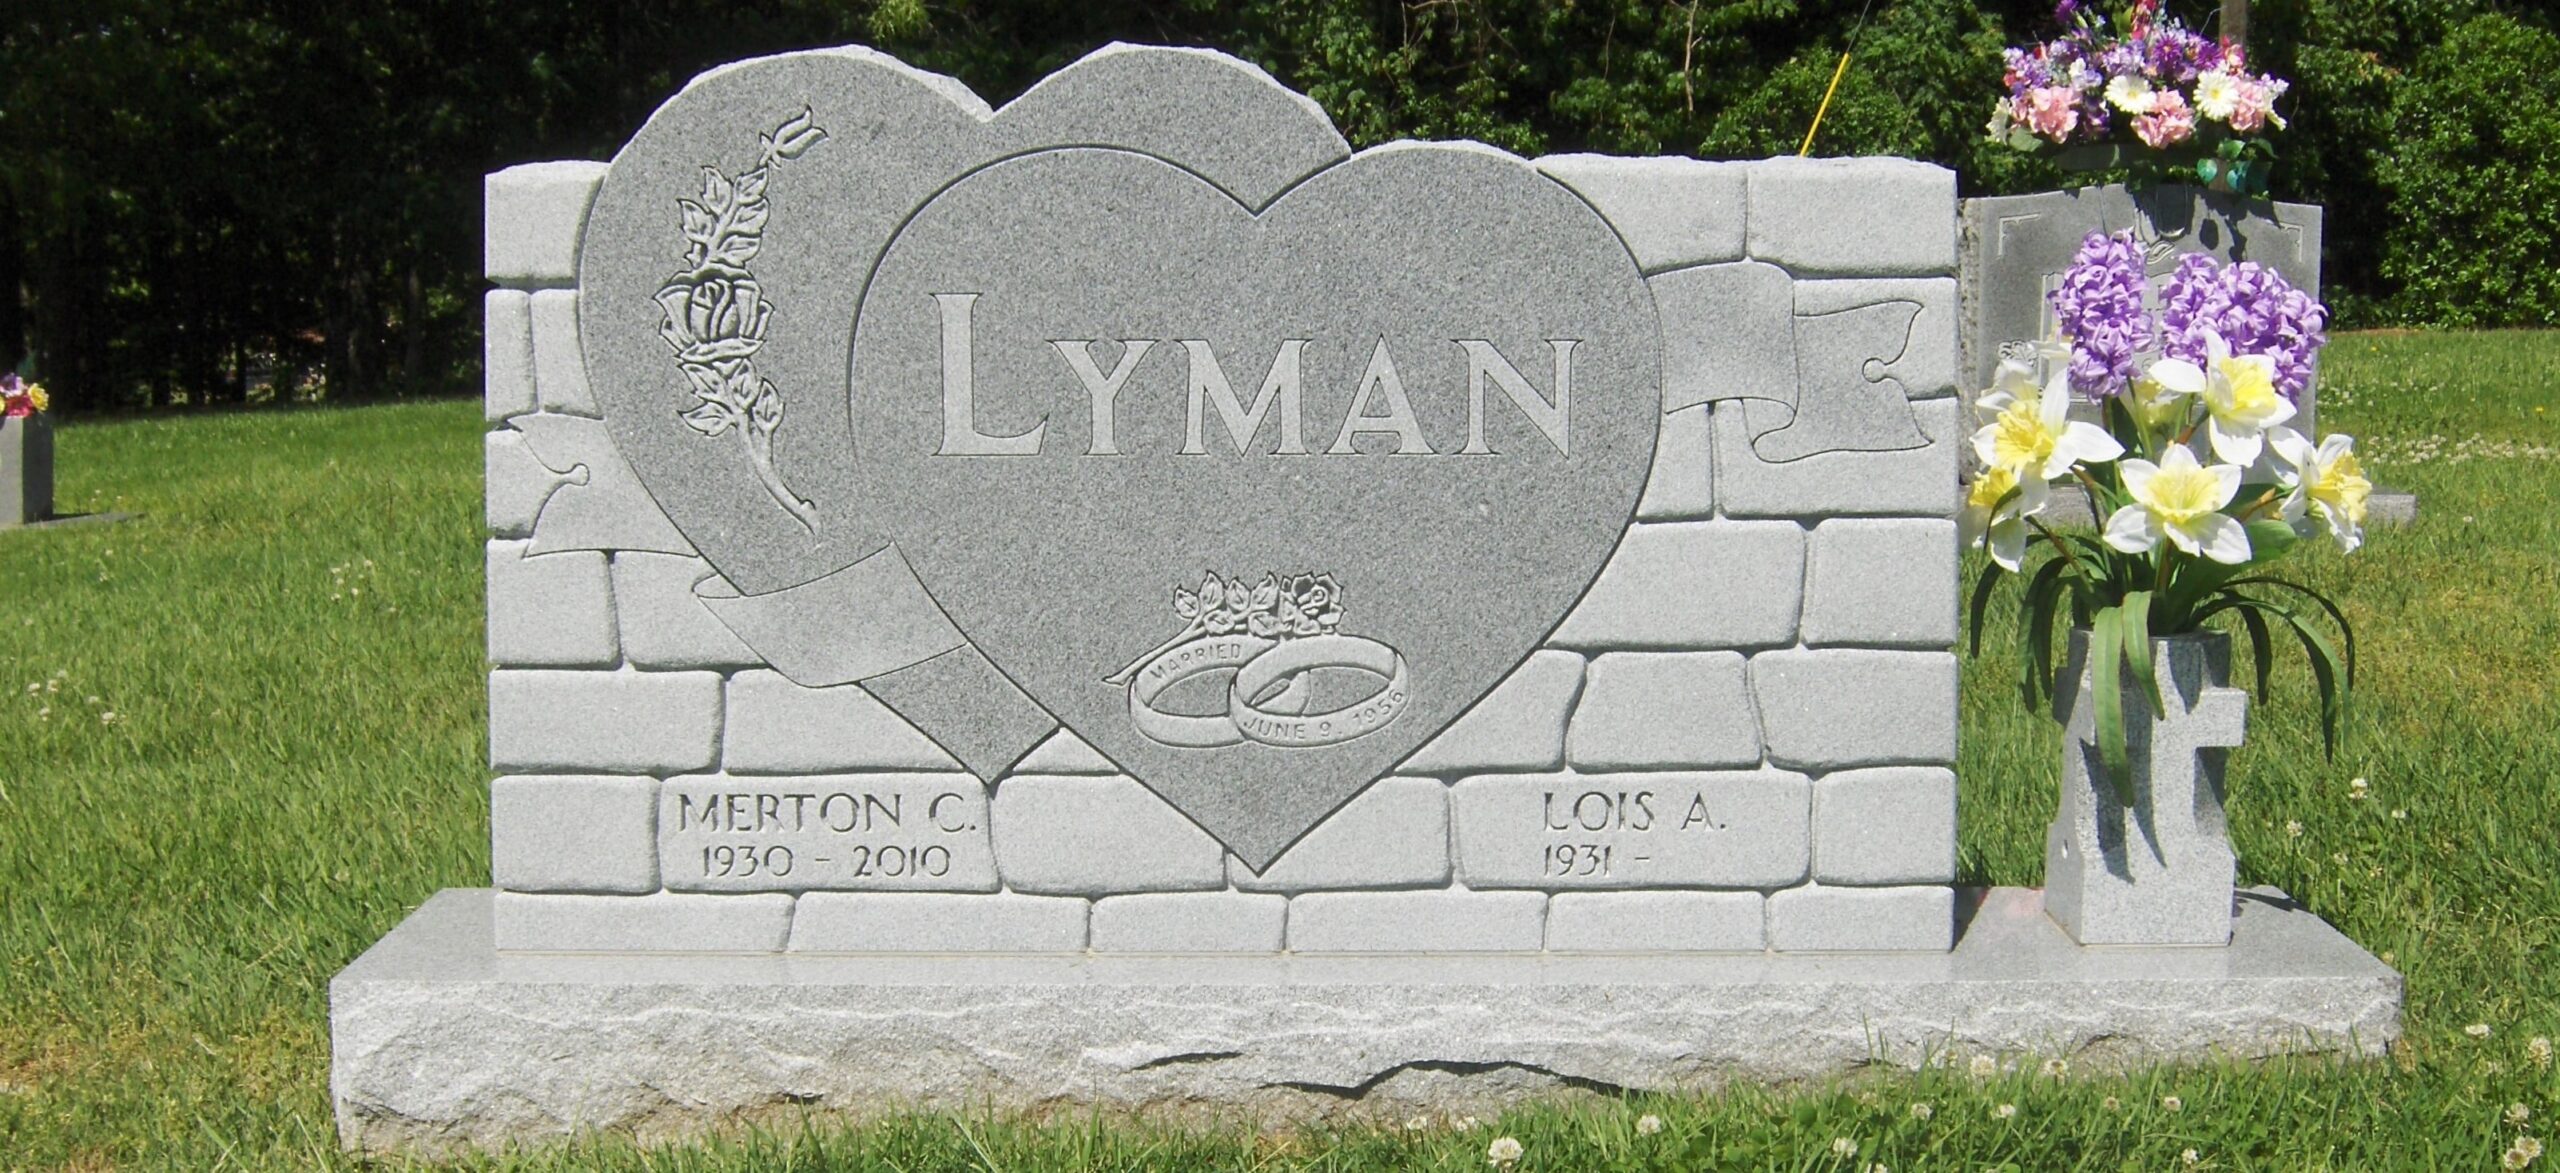 LYMAN ROTATED